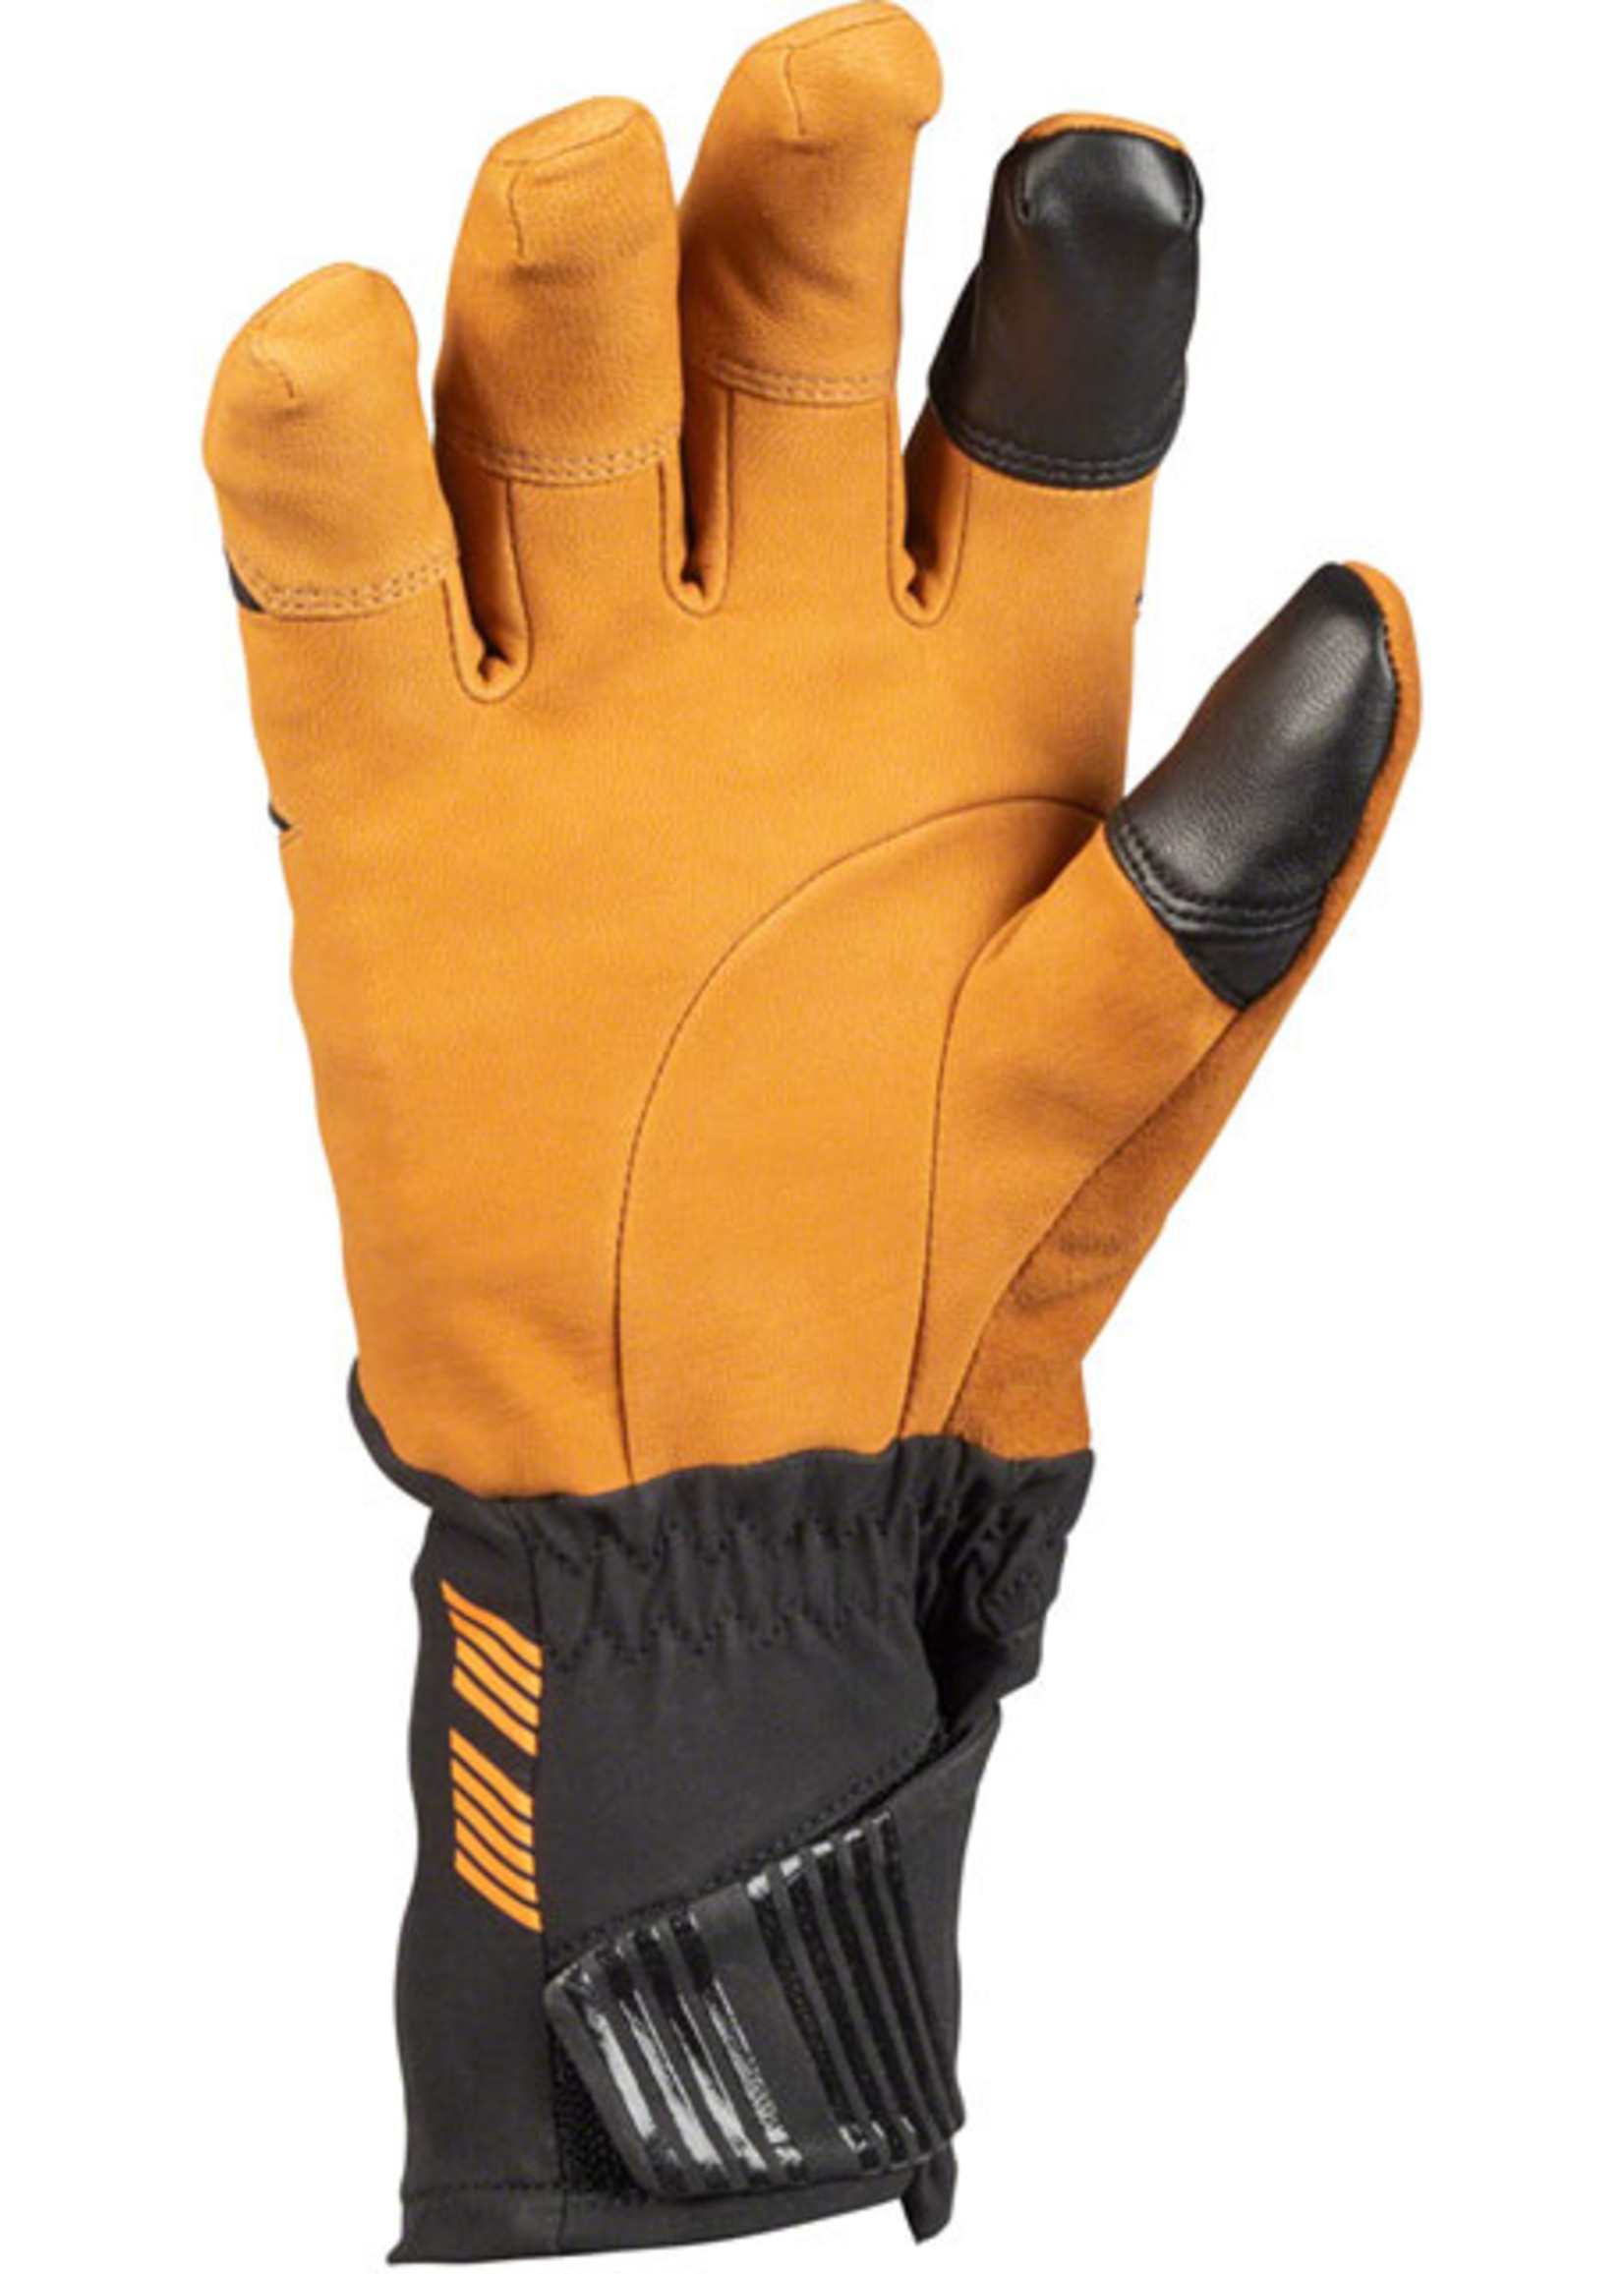 45NRTH 45NRTH Sturmfist 5 LTR Leather Glove - Tan/Black Full Finger Large